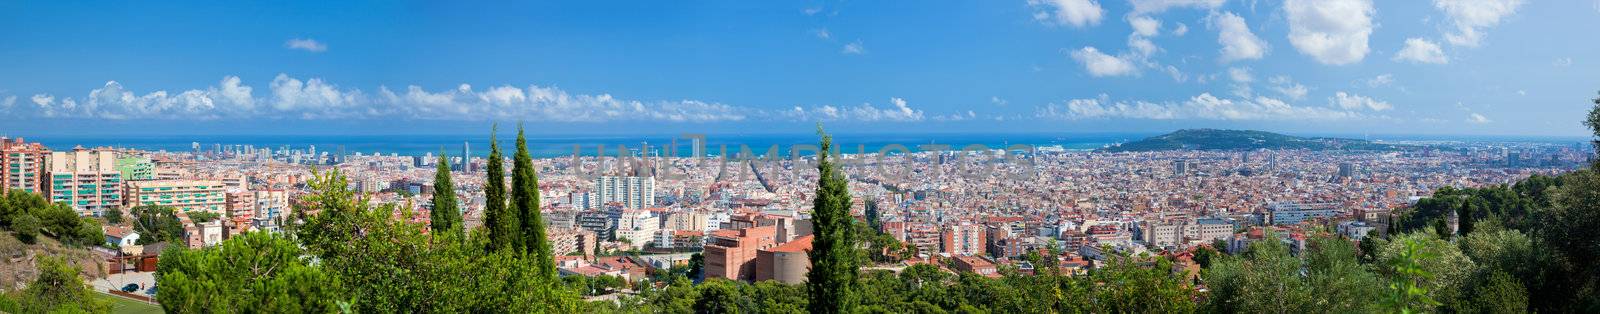 Barcelona, Spain skyline panorama by photocreo